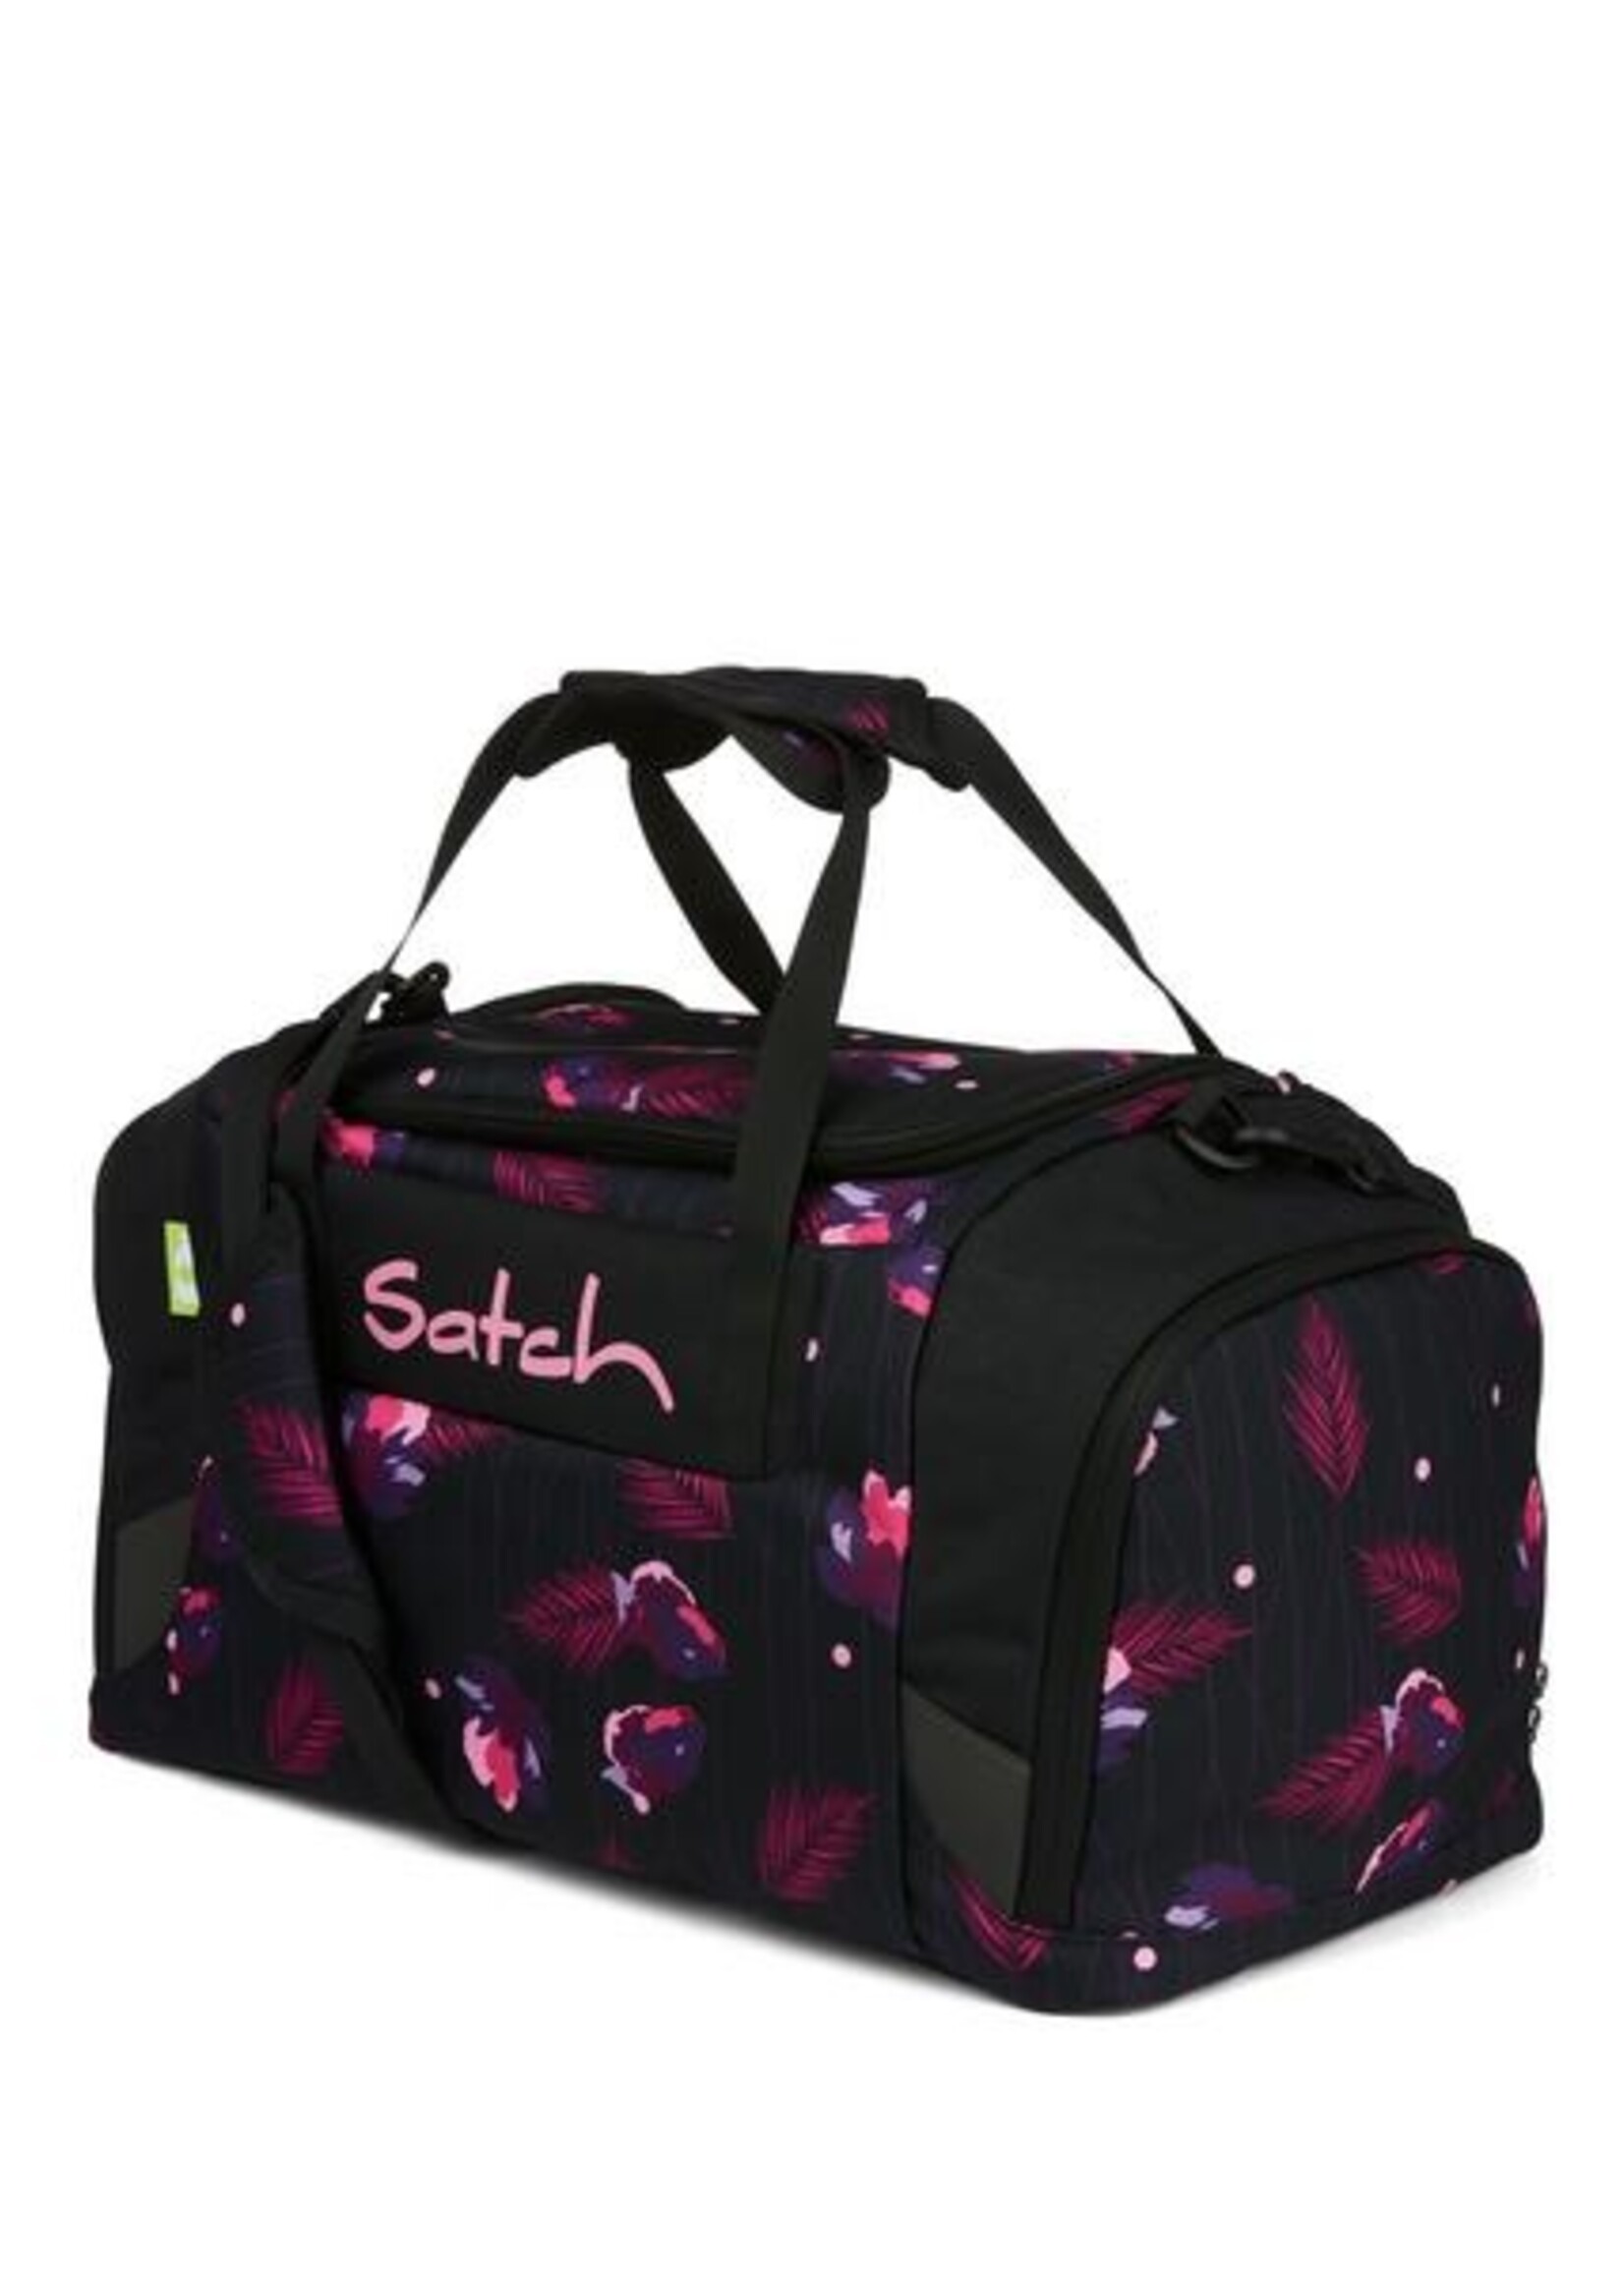 SATCH satch Duffle Bag